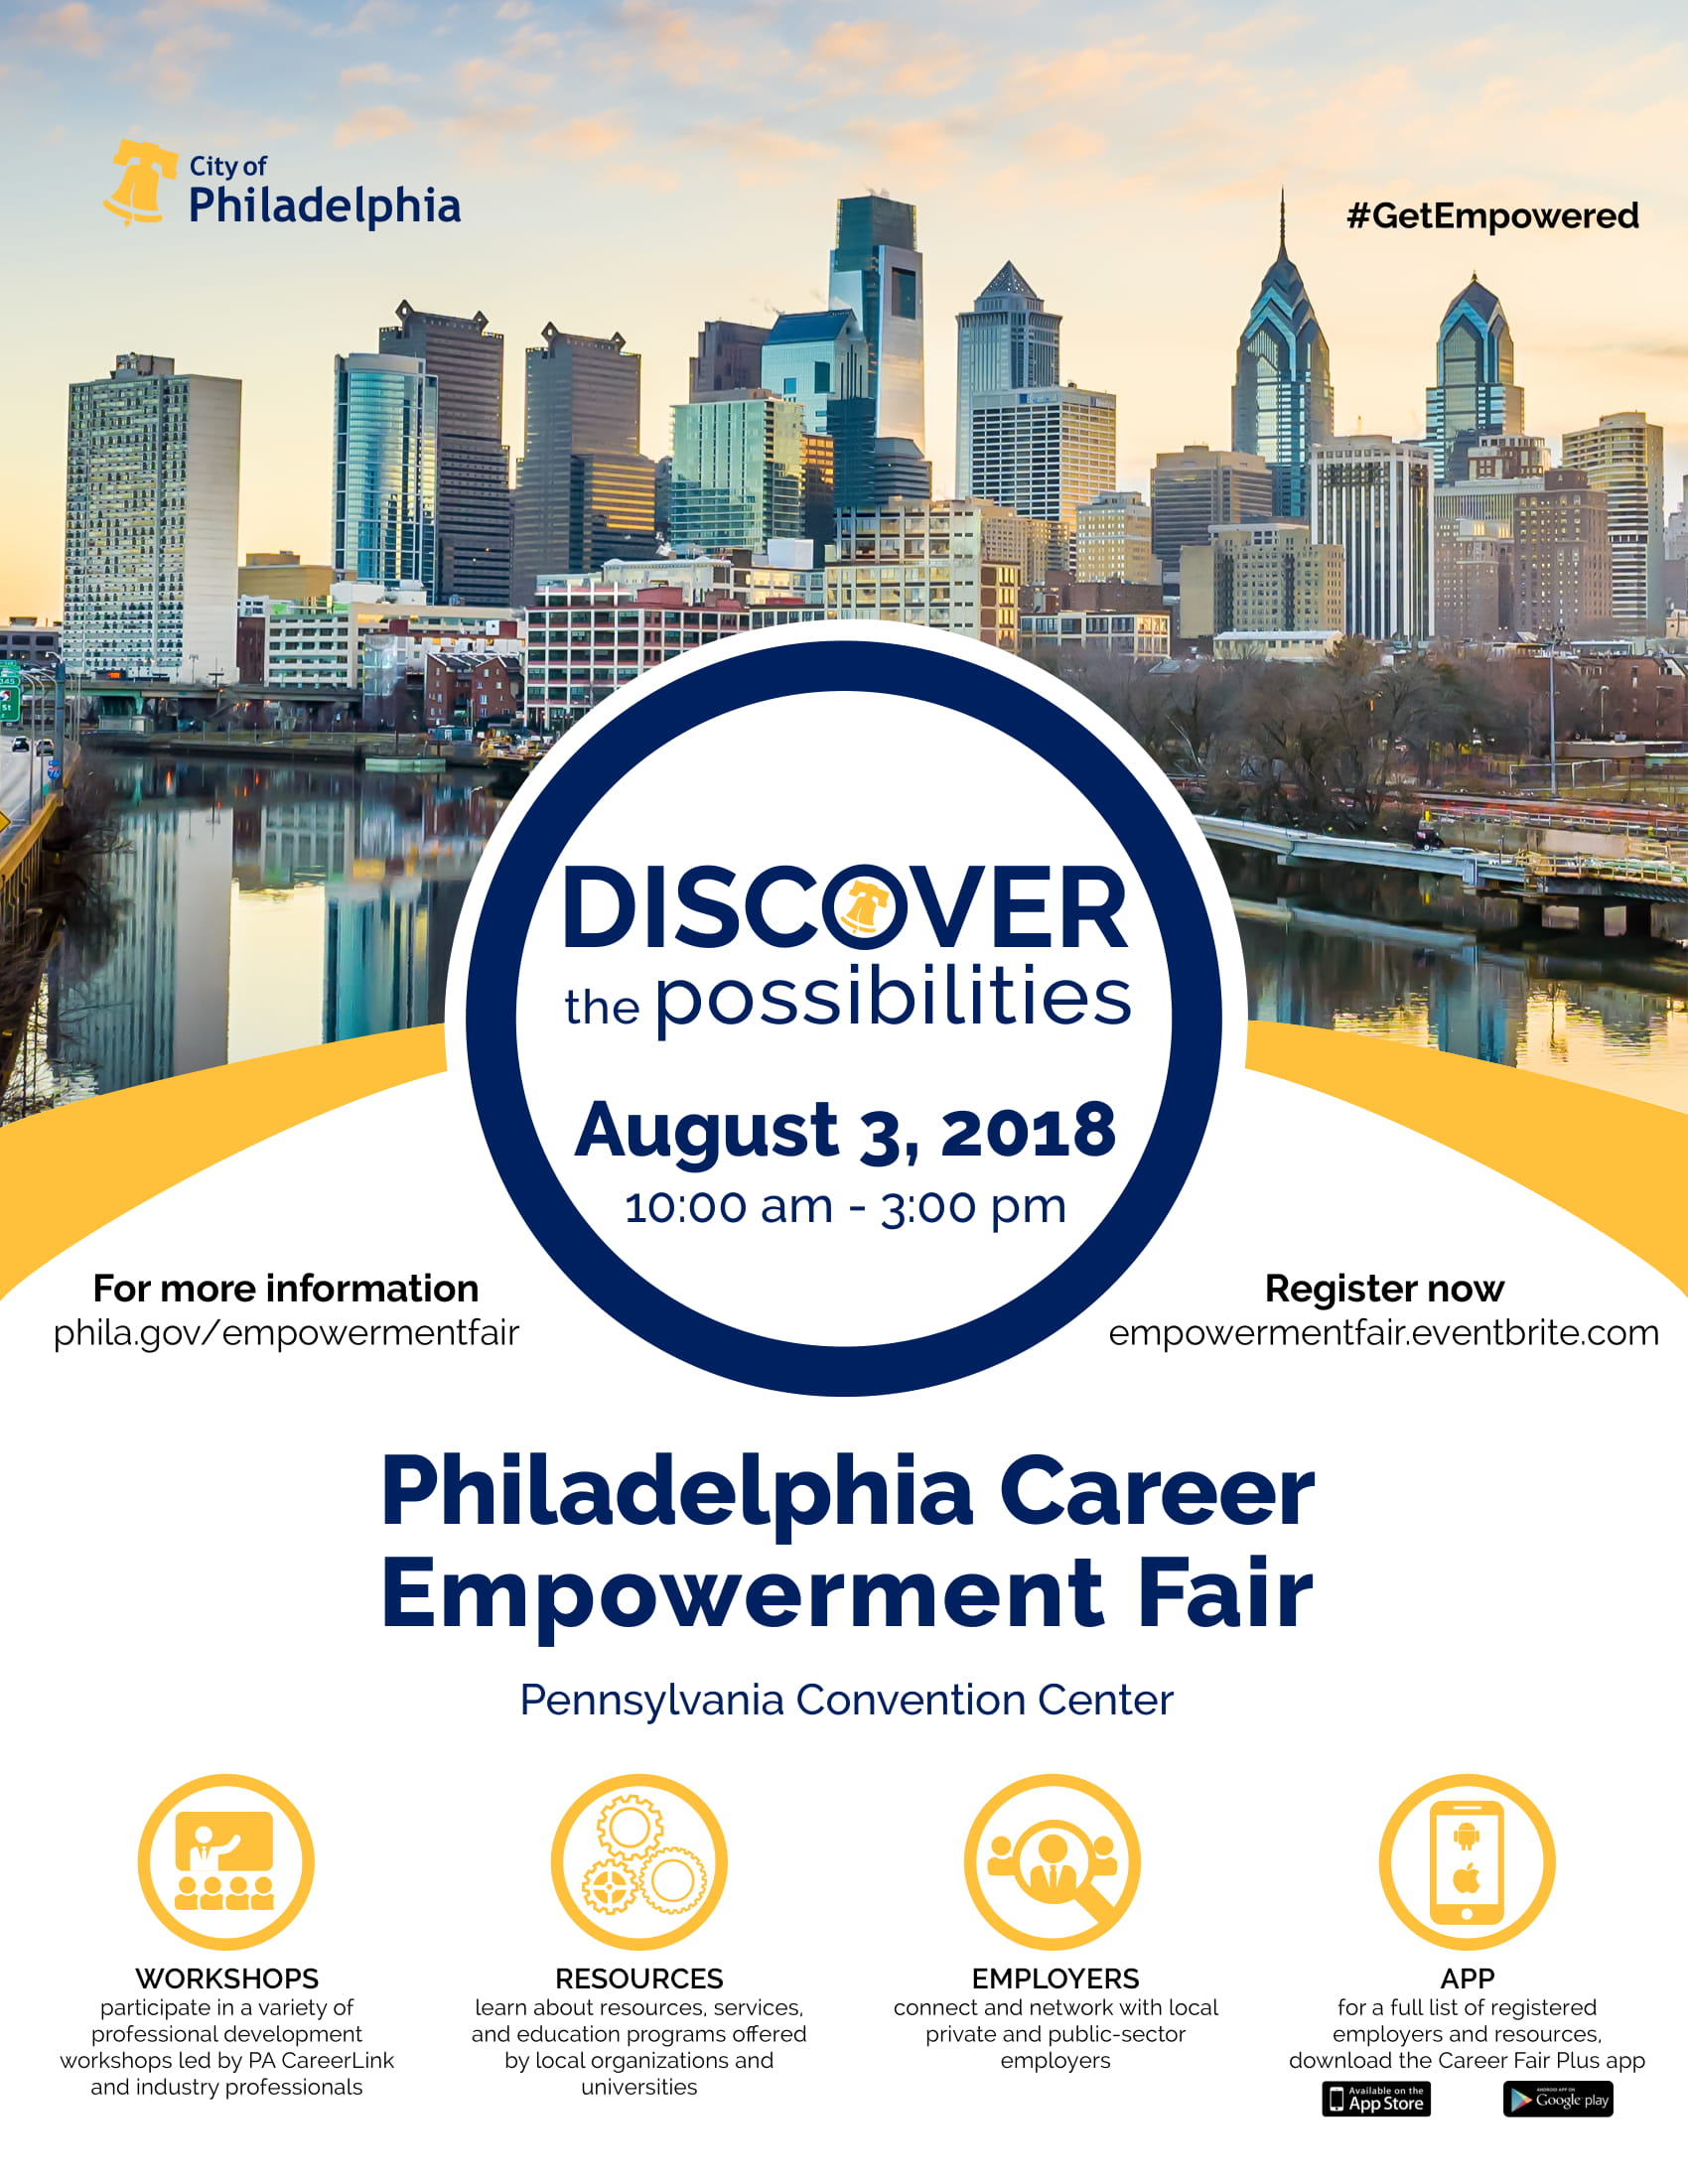 Philadelphia Career Empowerment Fair